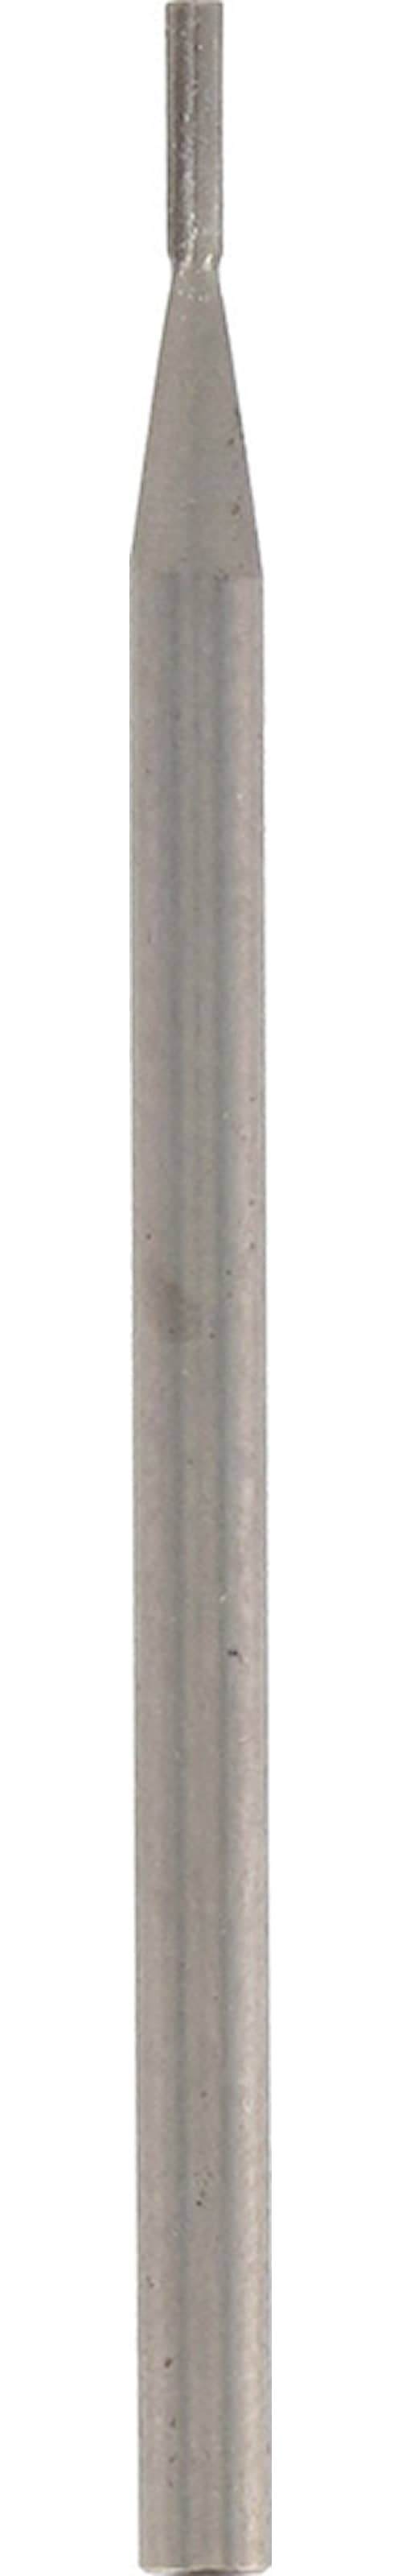 Dremel graverestift 111JA 0,8 mm. 3 stk. pak Graverstift